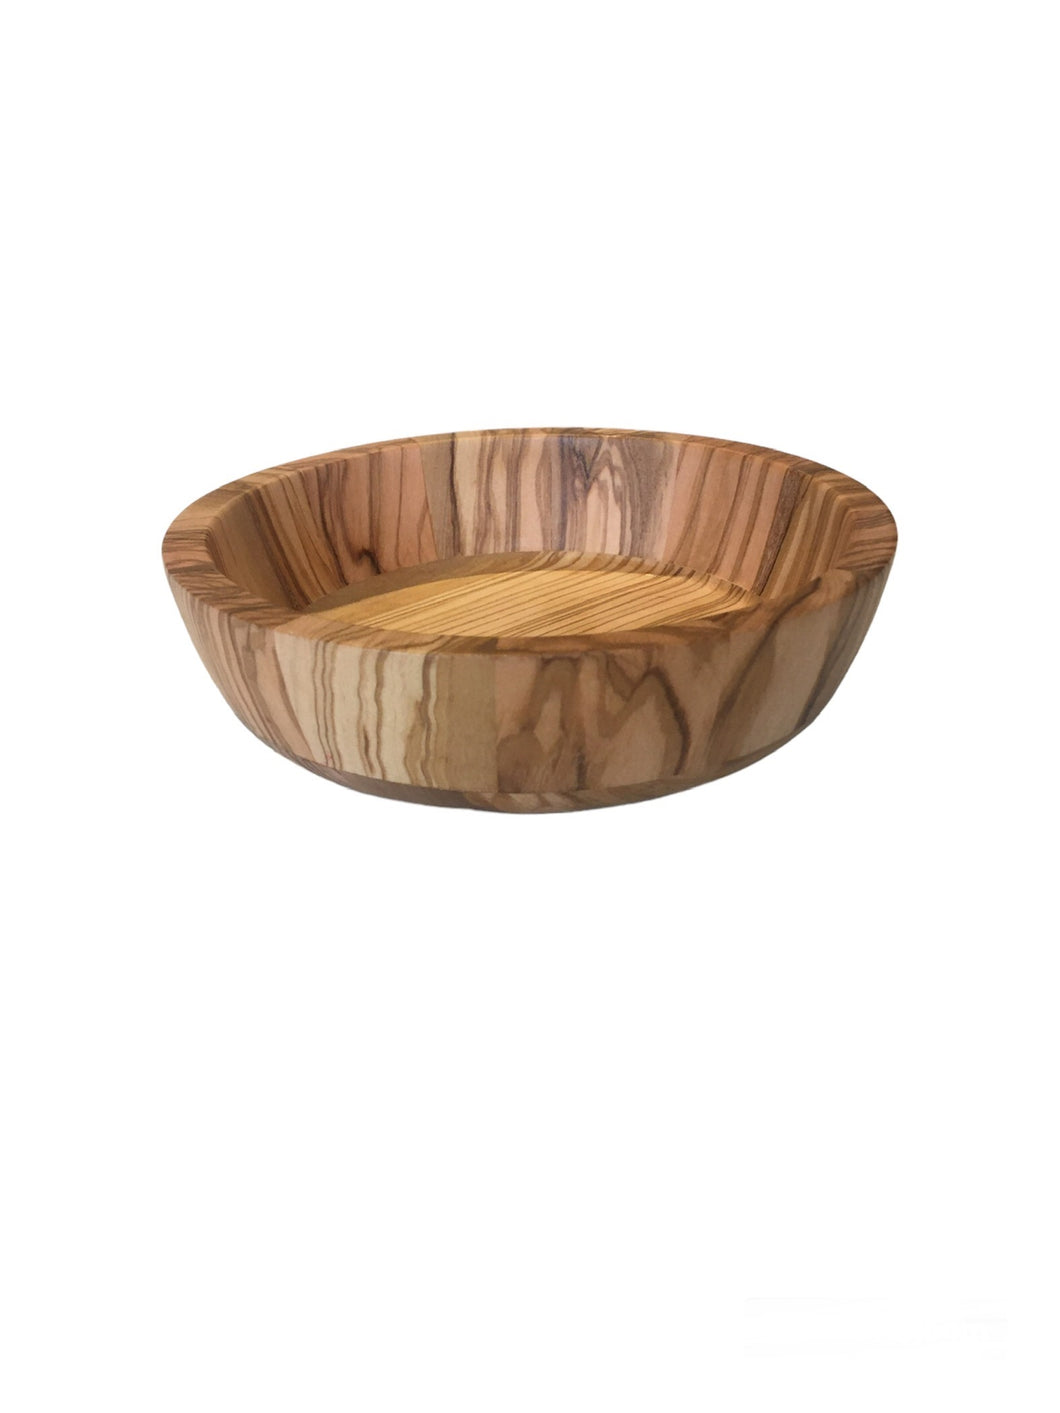 meduim wooden bowl